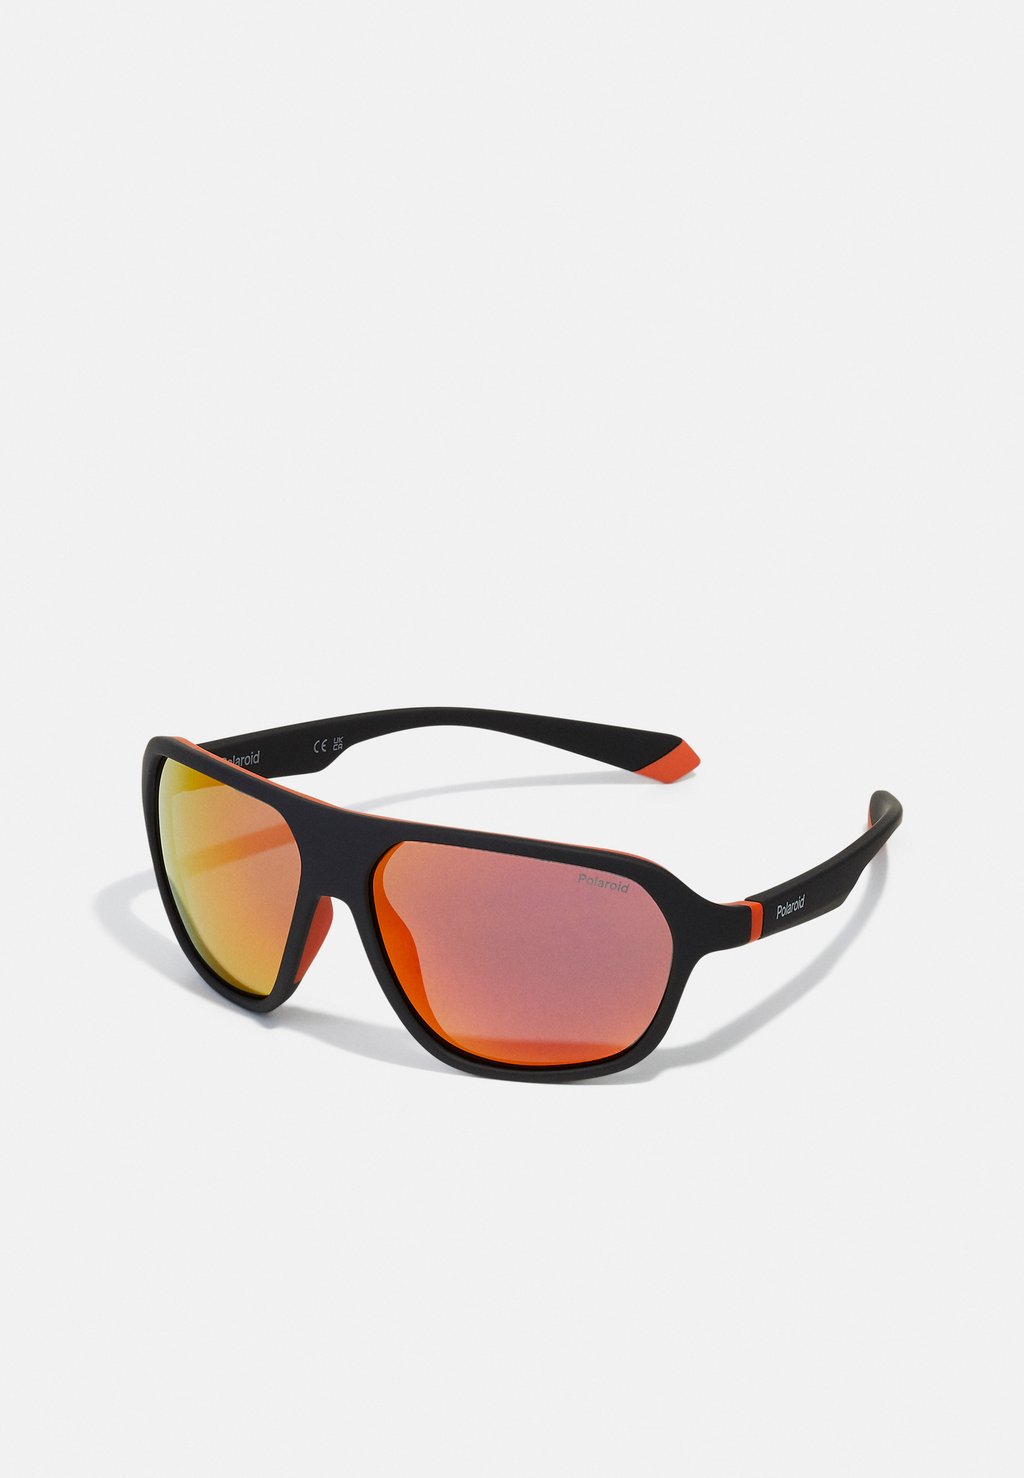 Солнцезащитные очки UNISEX Polaroid, цвет matte black/orange